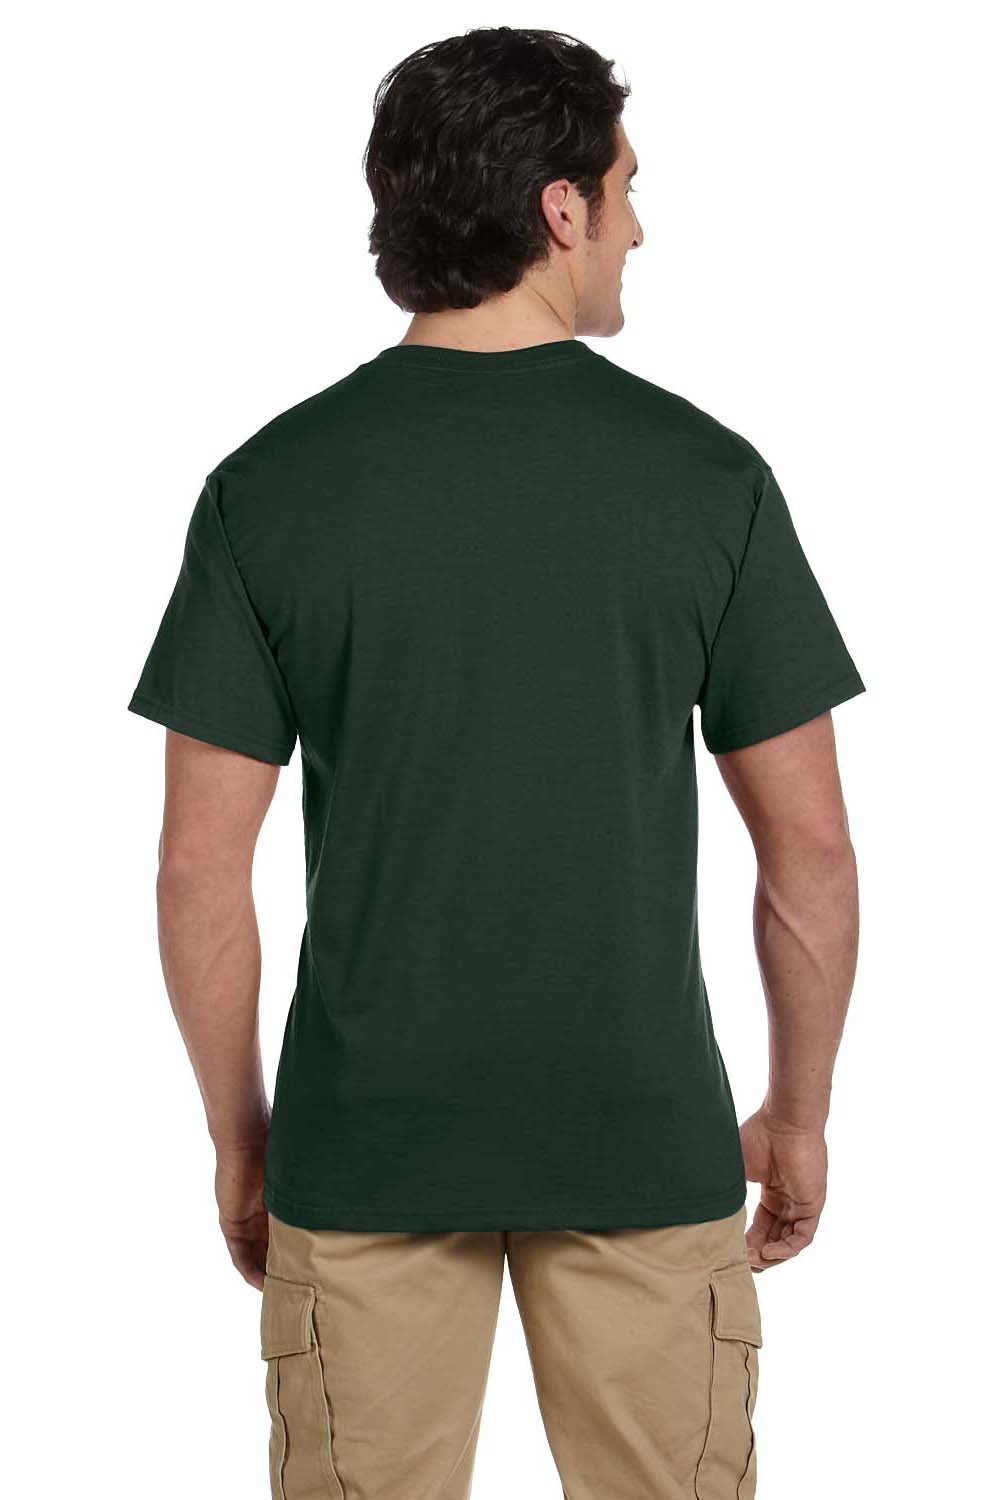 Jerzees 29P Mens Dri-Power Moisture Wicking Short Sleeve Crewneck T-Shirt w/ Pocket Forest Green Back